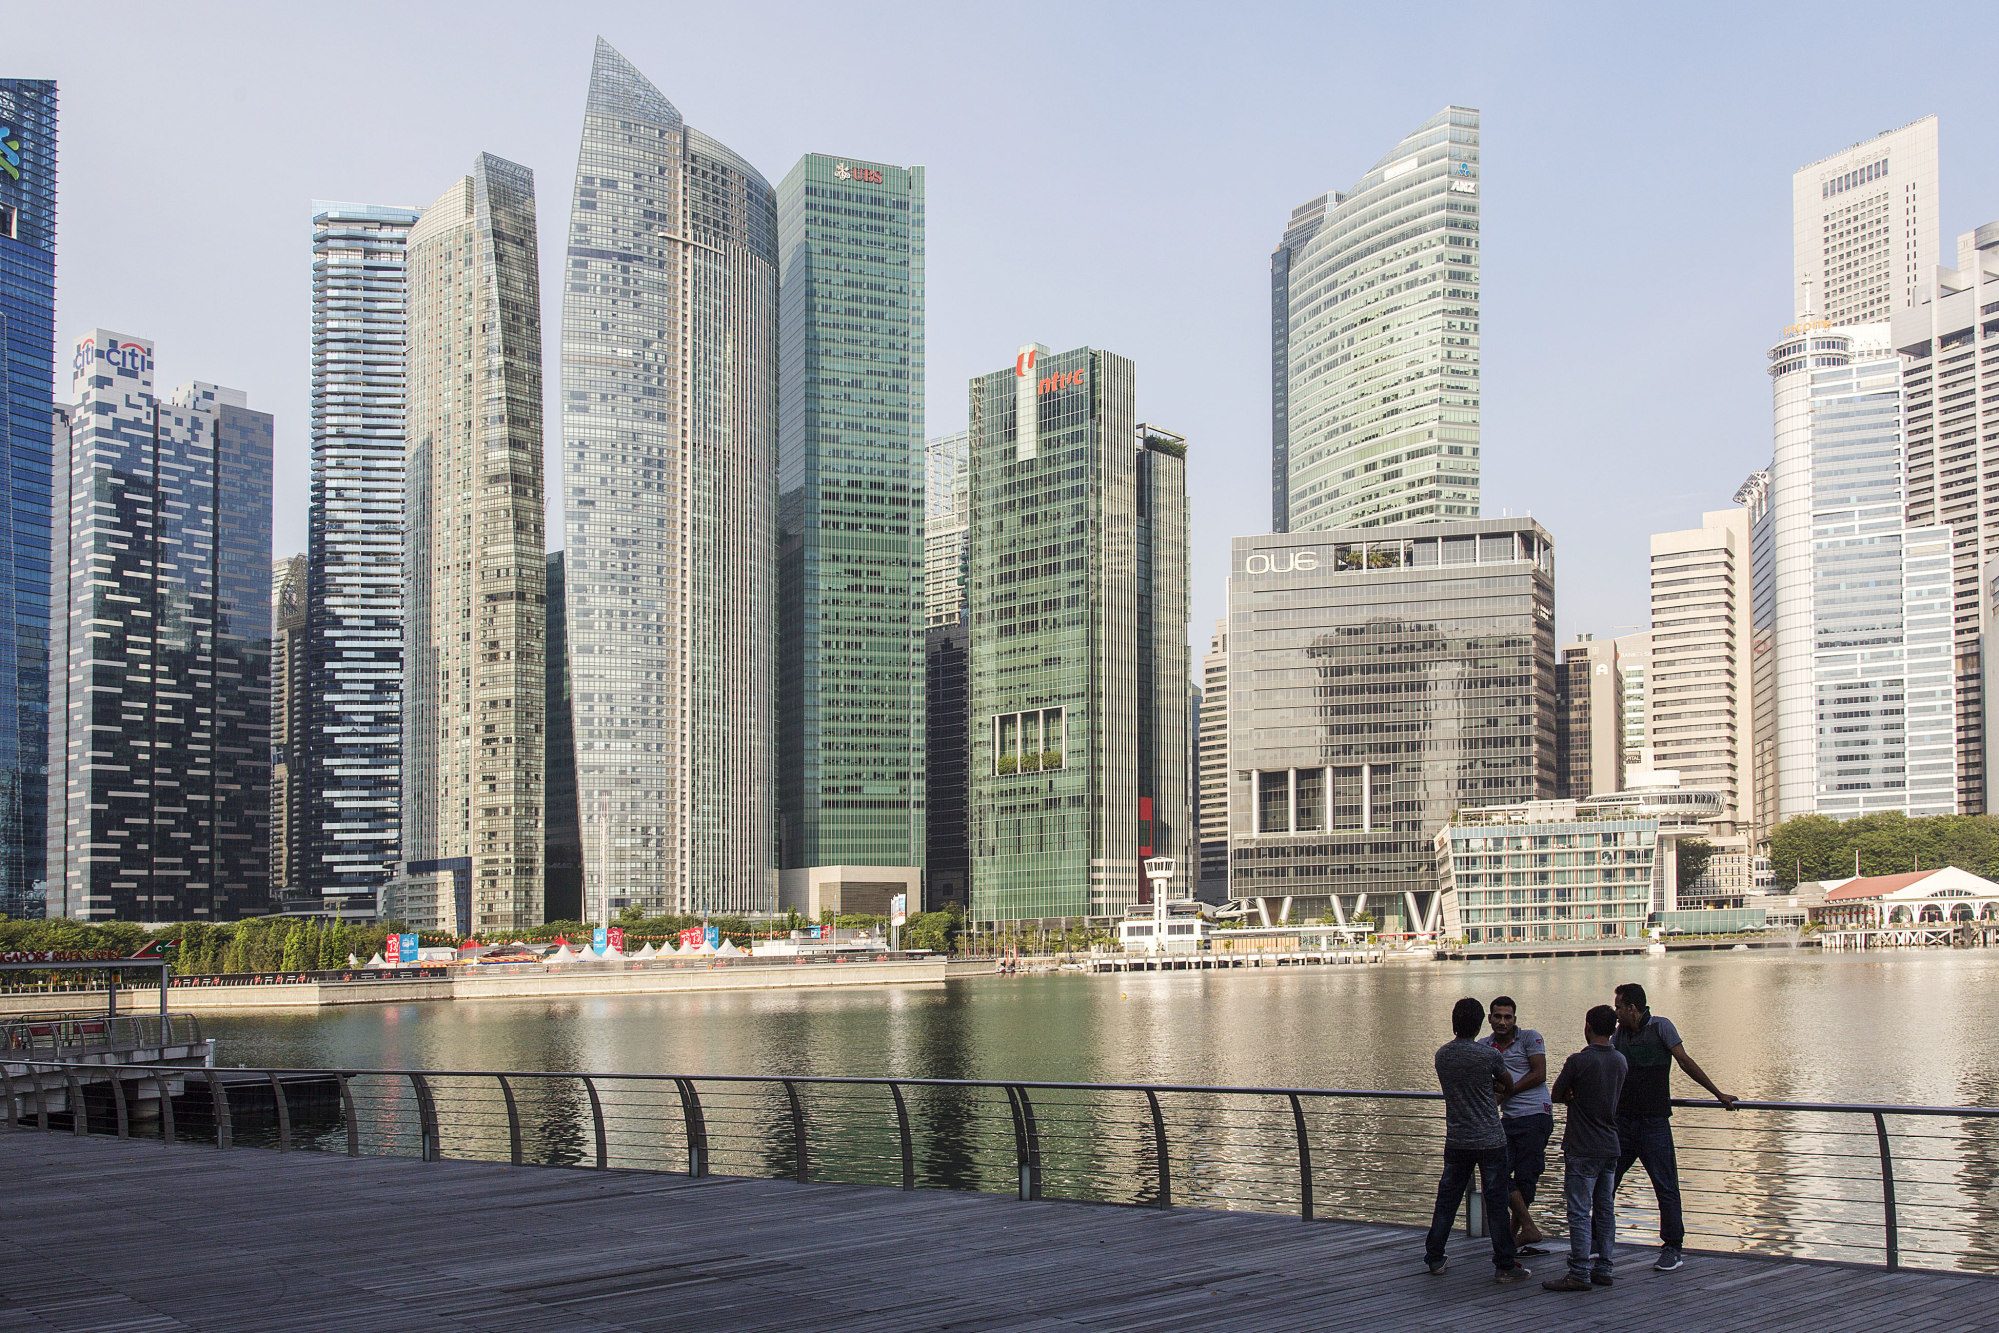 GuocoLand billionaire, partners buy prime Singapore property for $743m